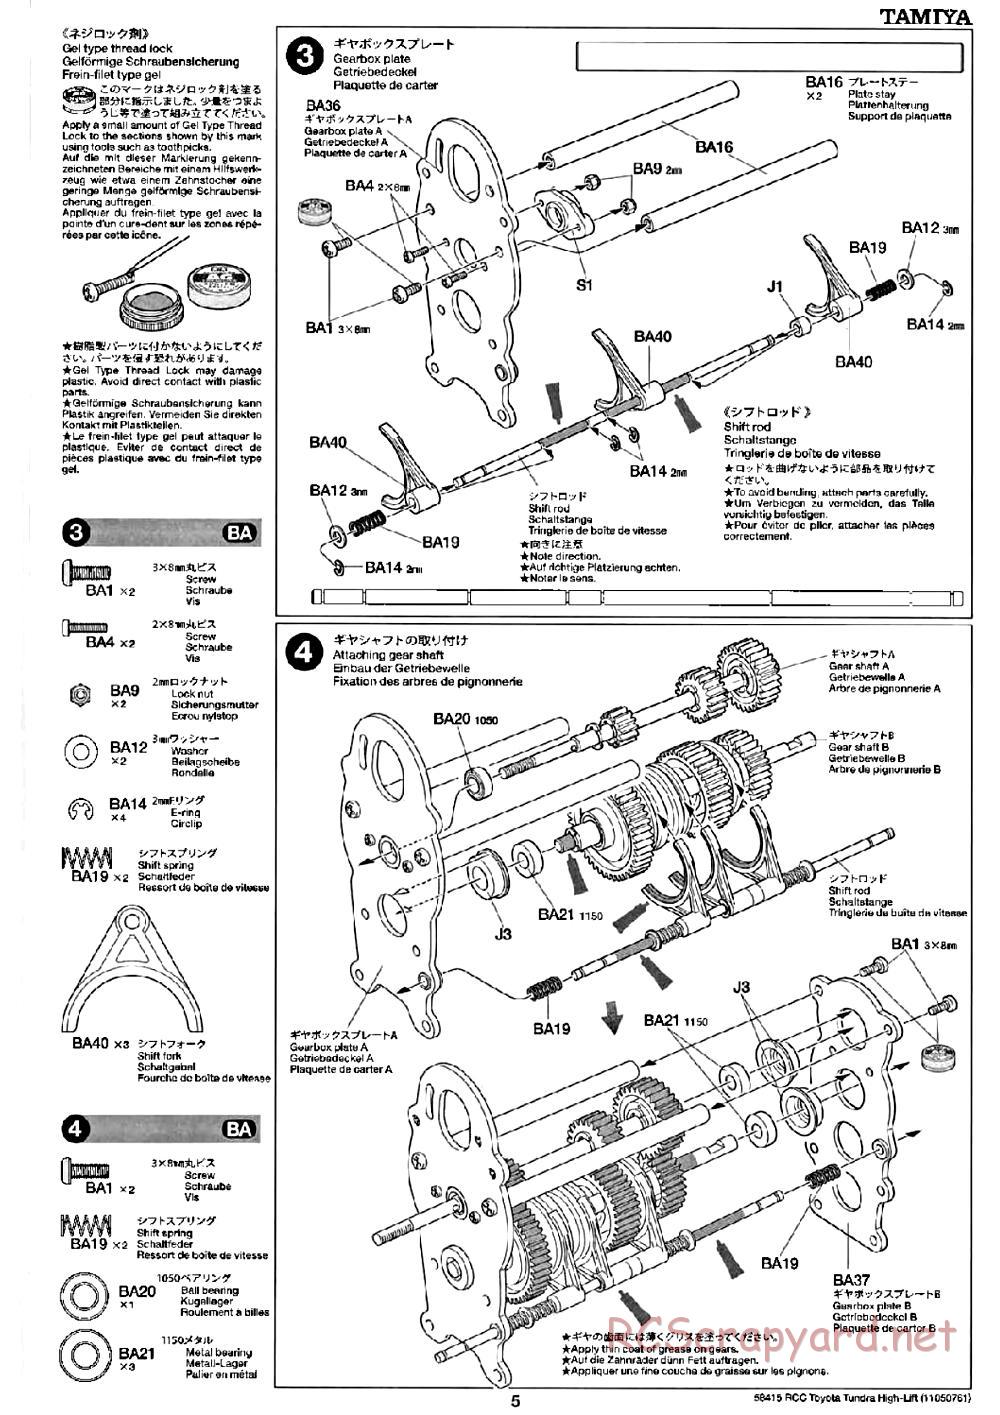 Tamiya - Toyota Tundra High-Lift Chassis - Manual - Page 5